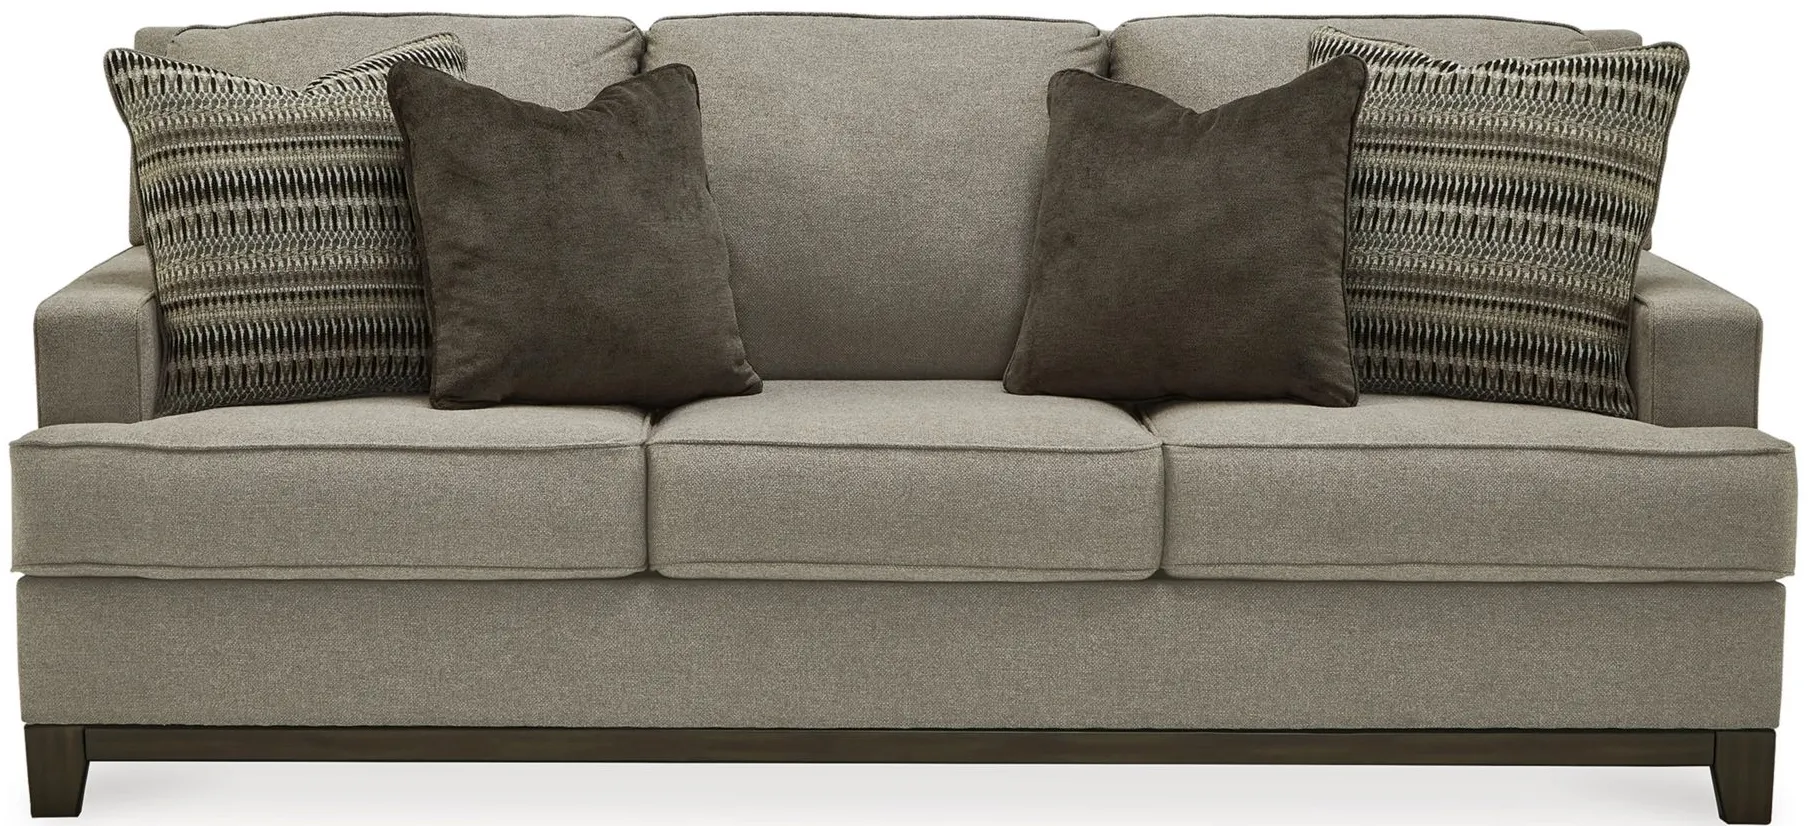 Kaywood Sofa in Granite by Ashley Furniture